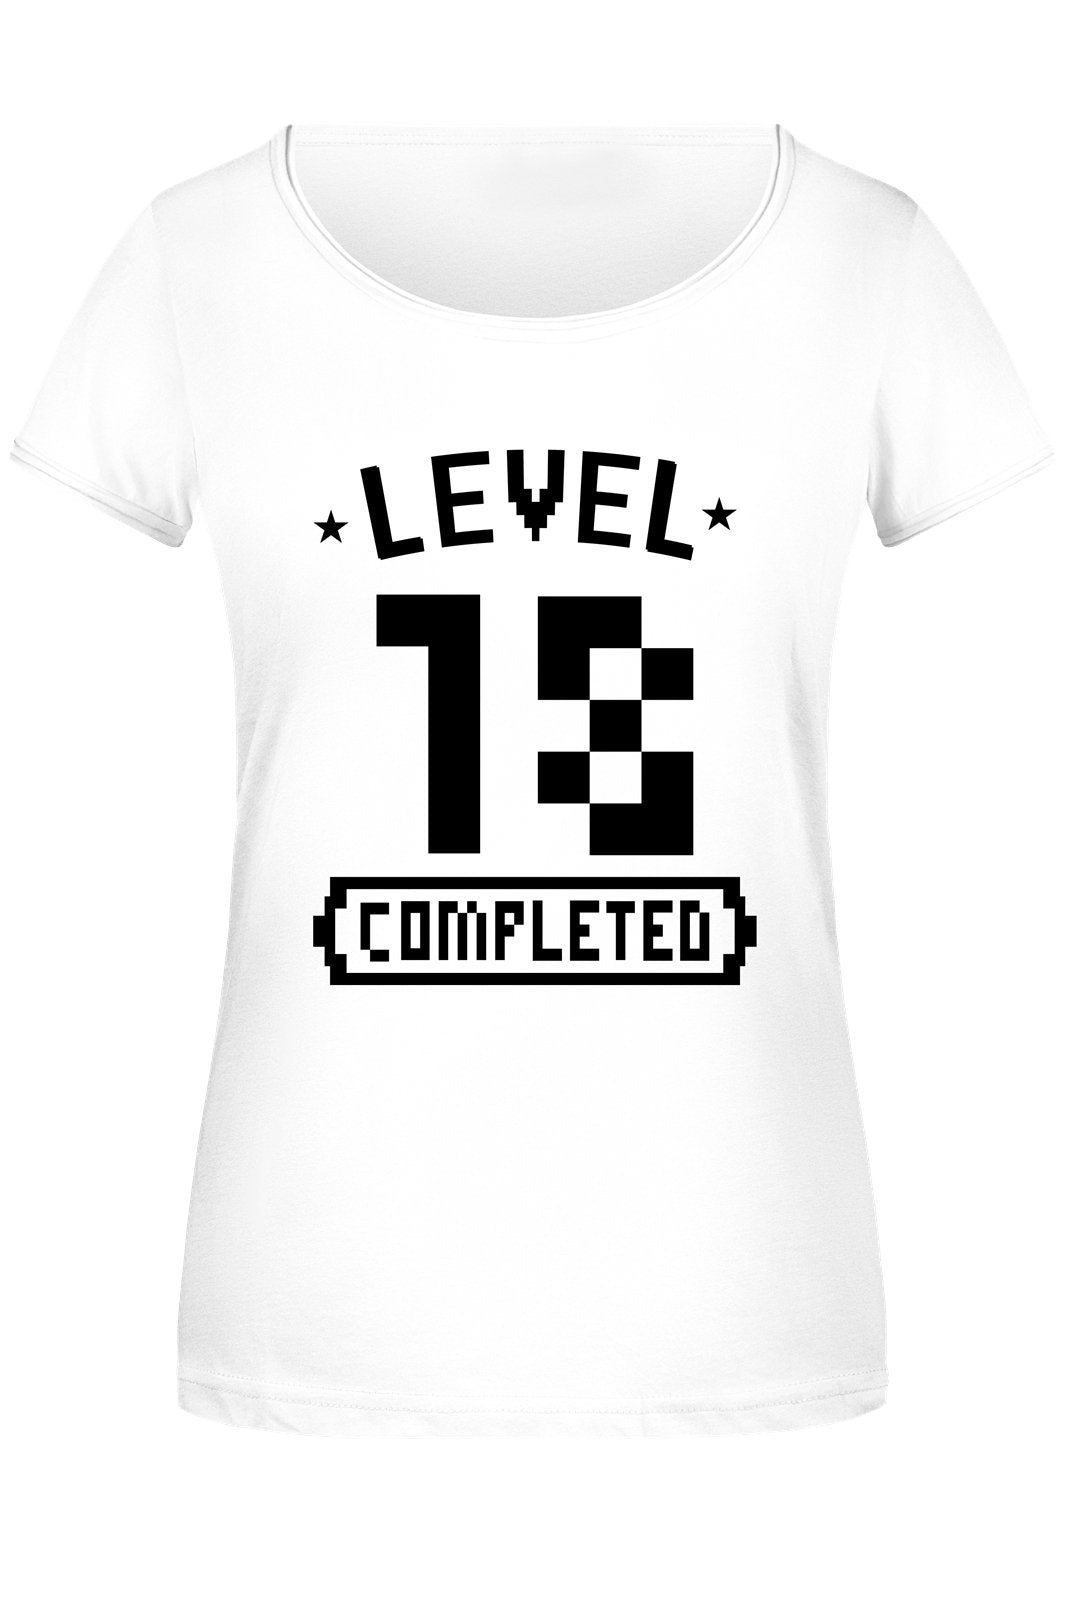 Bild: T-Shirt Damen - Level 18 completed Geschenkidee